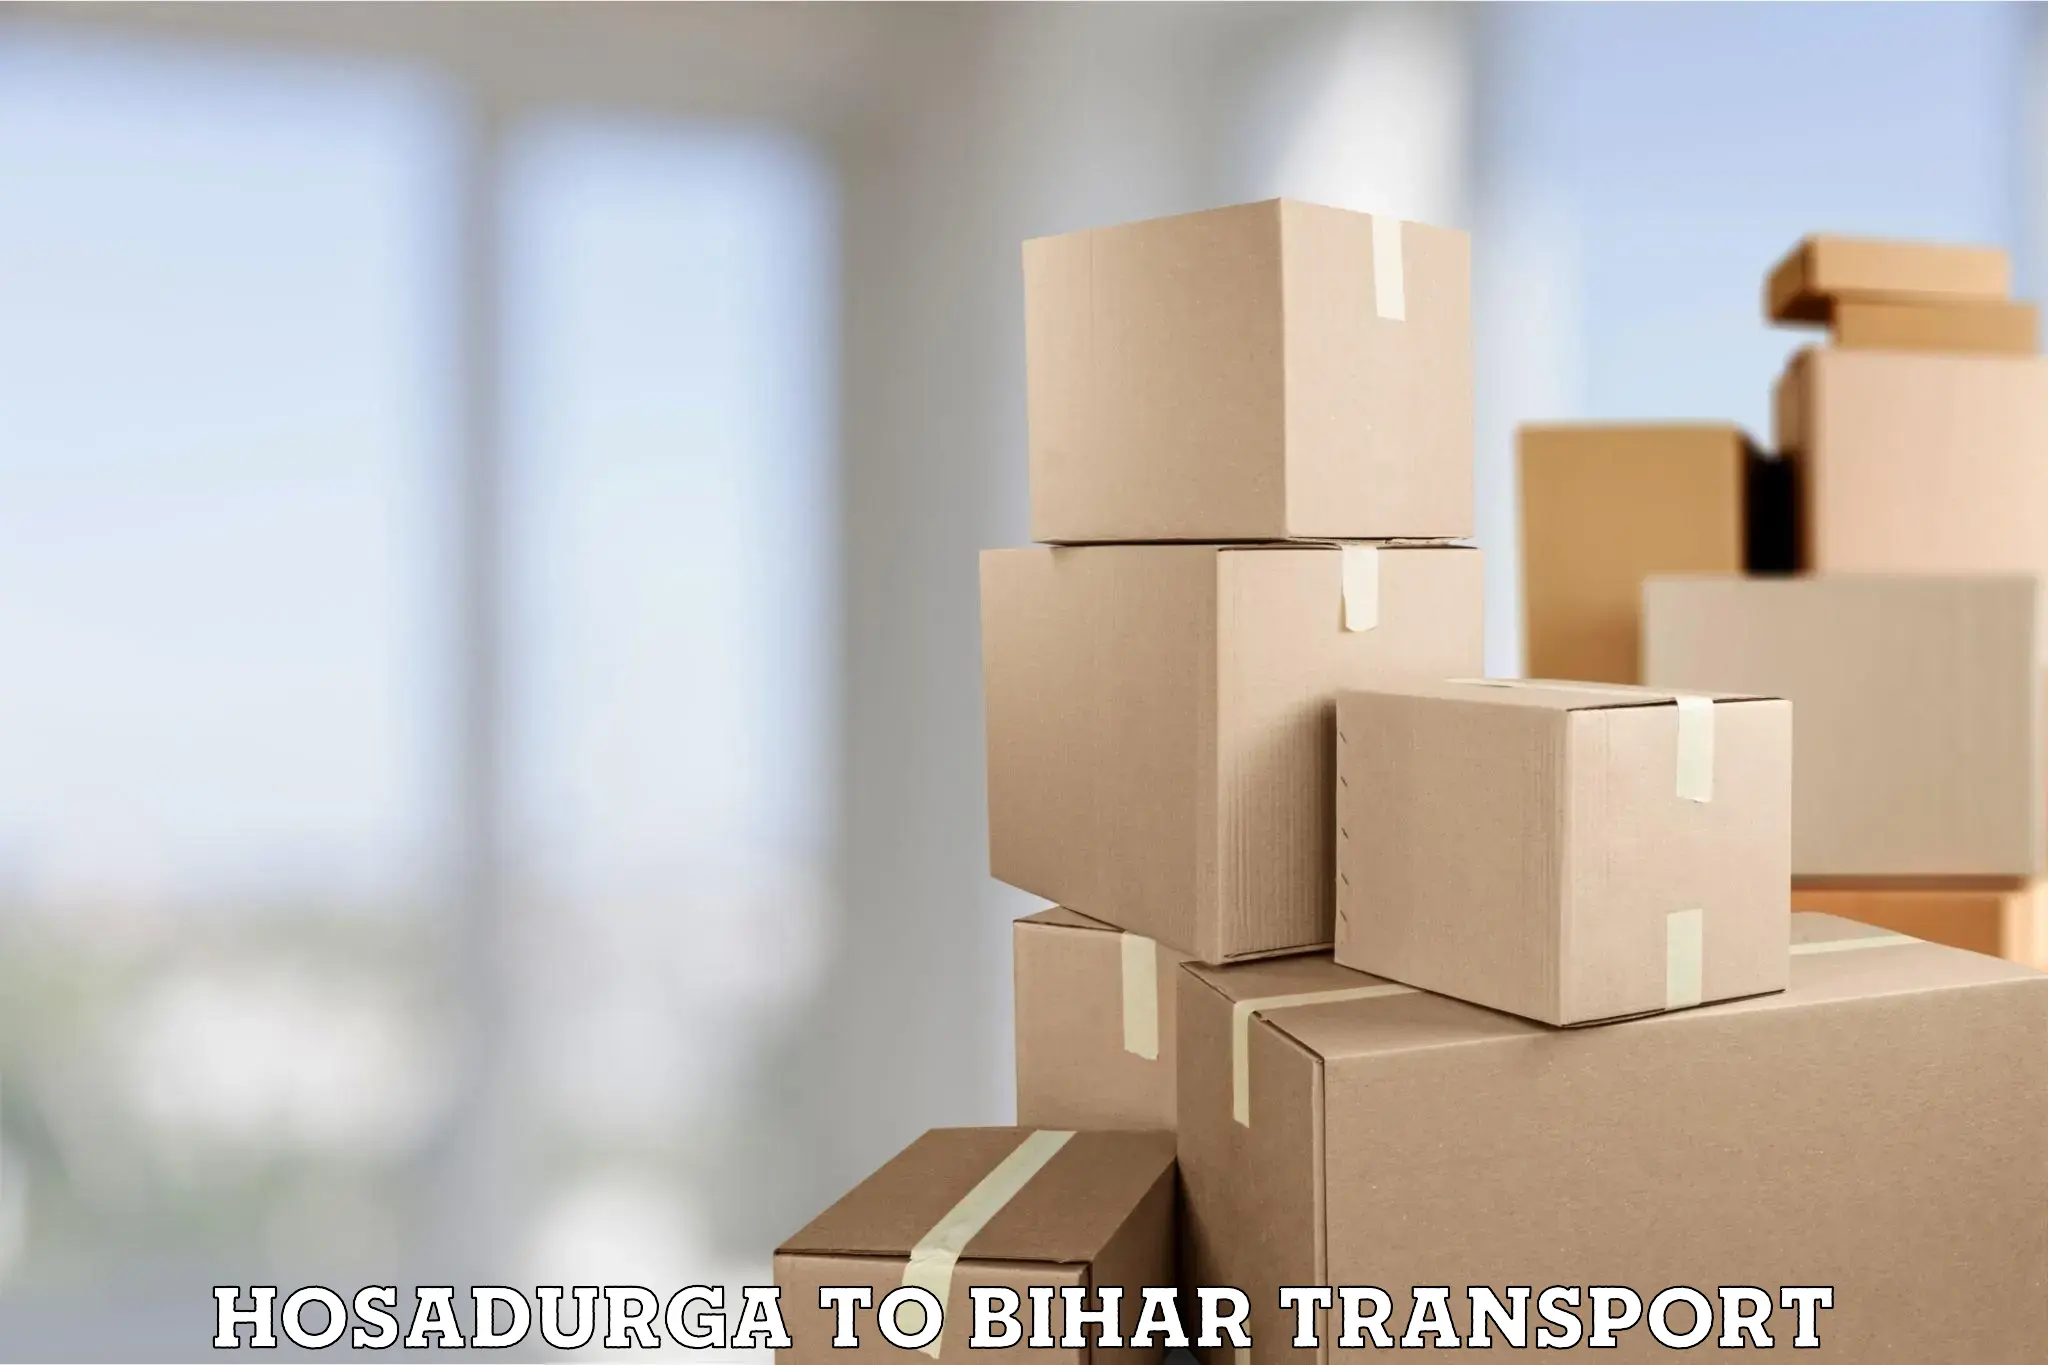 Container transport service Hosadurga to Fatwah